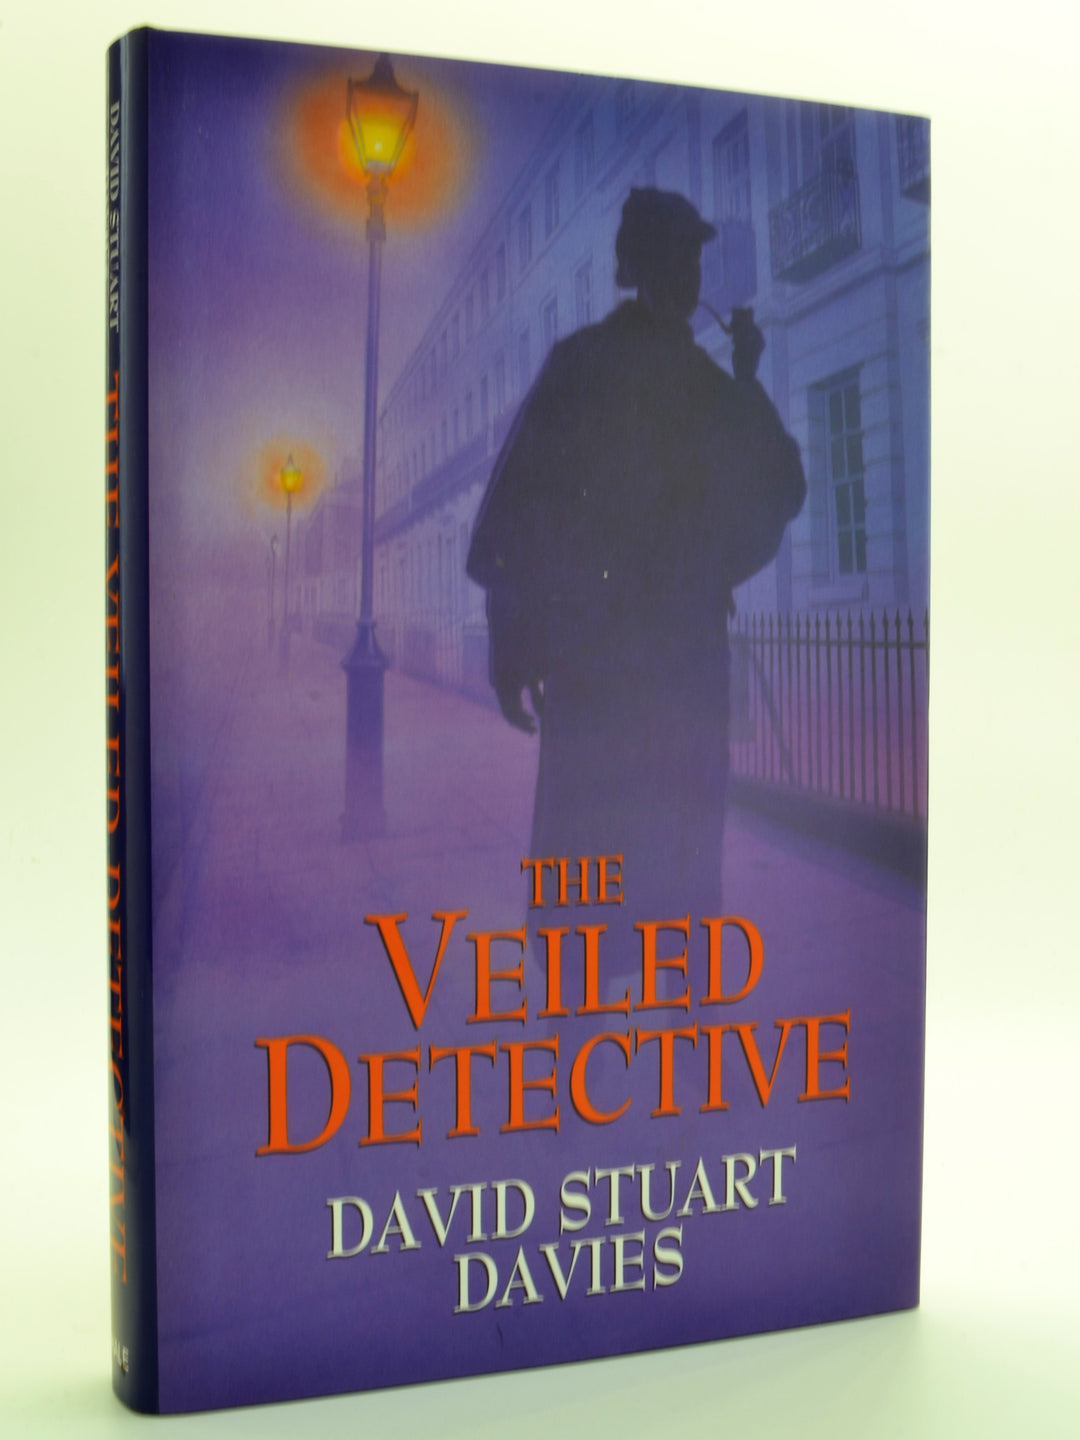 Davies, David Stuart - The Veiled Detective | back cover